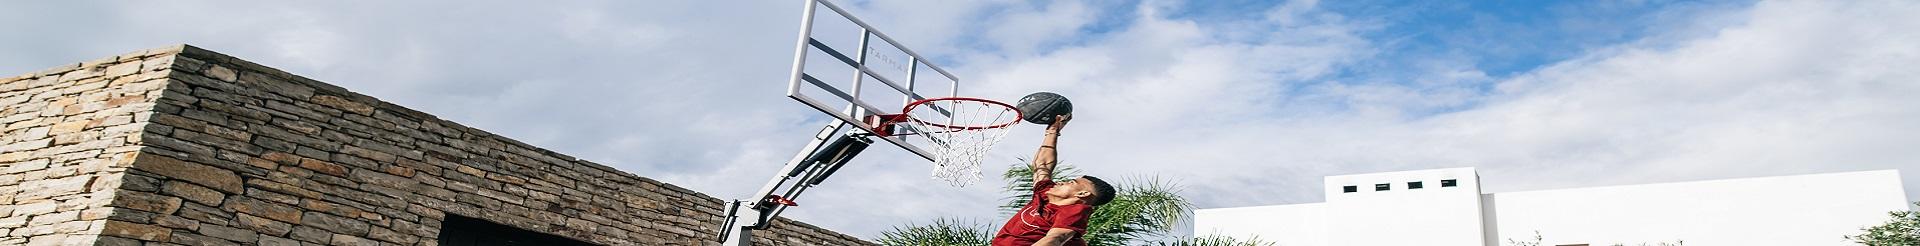 Basketball Backboard, Hoop and Accessories